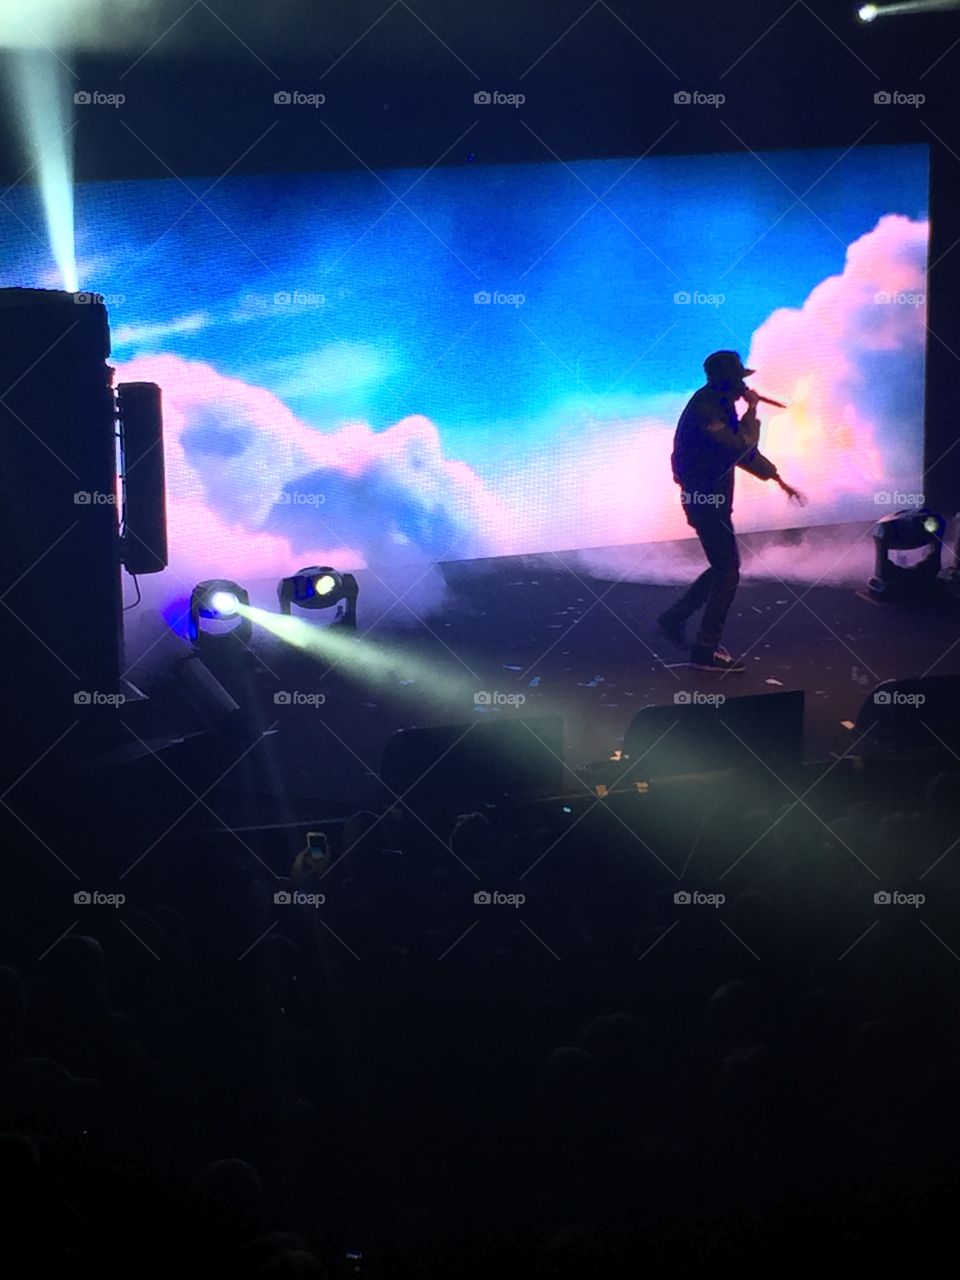 Logic concert 2016